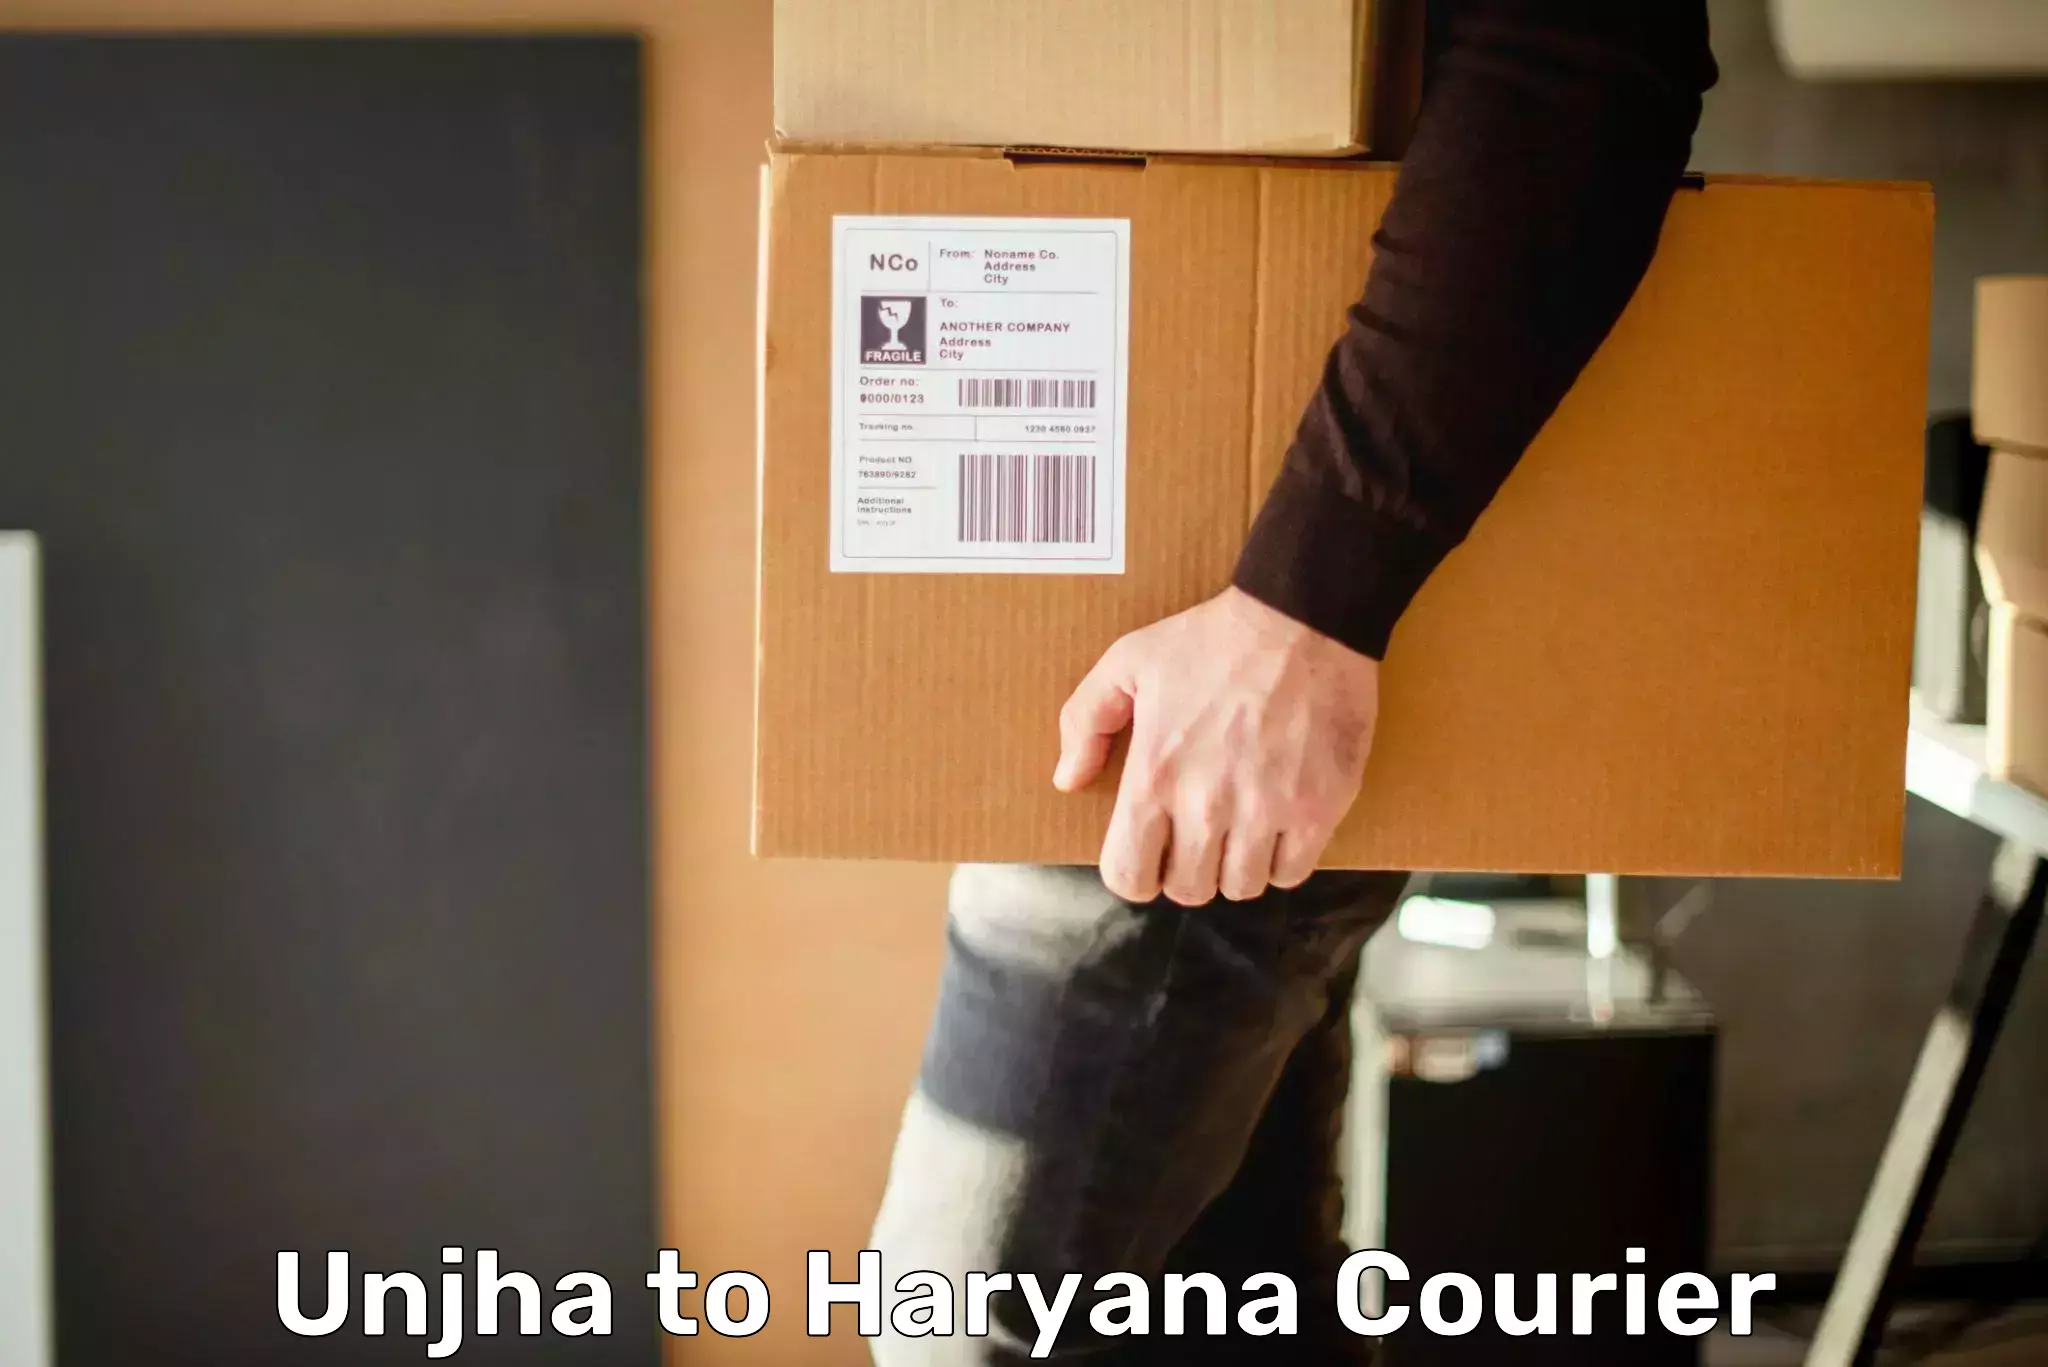 Courier app Unjha to Haryana